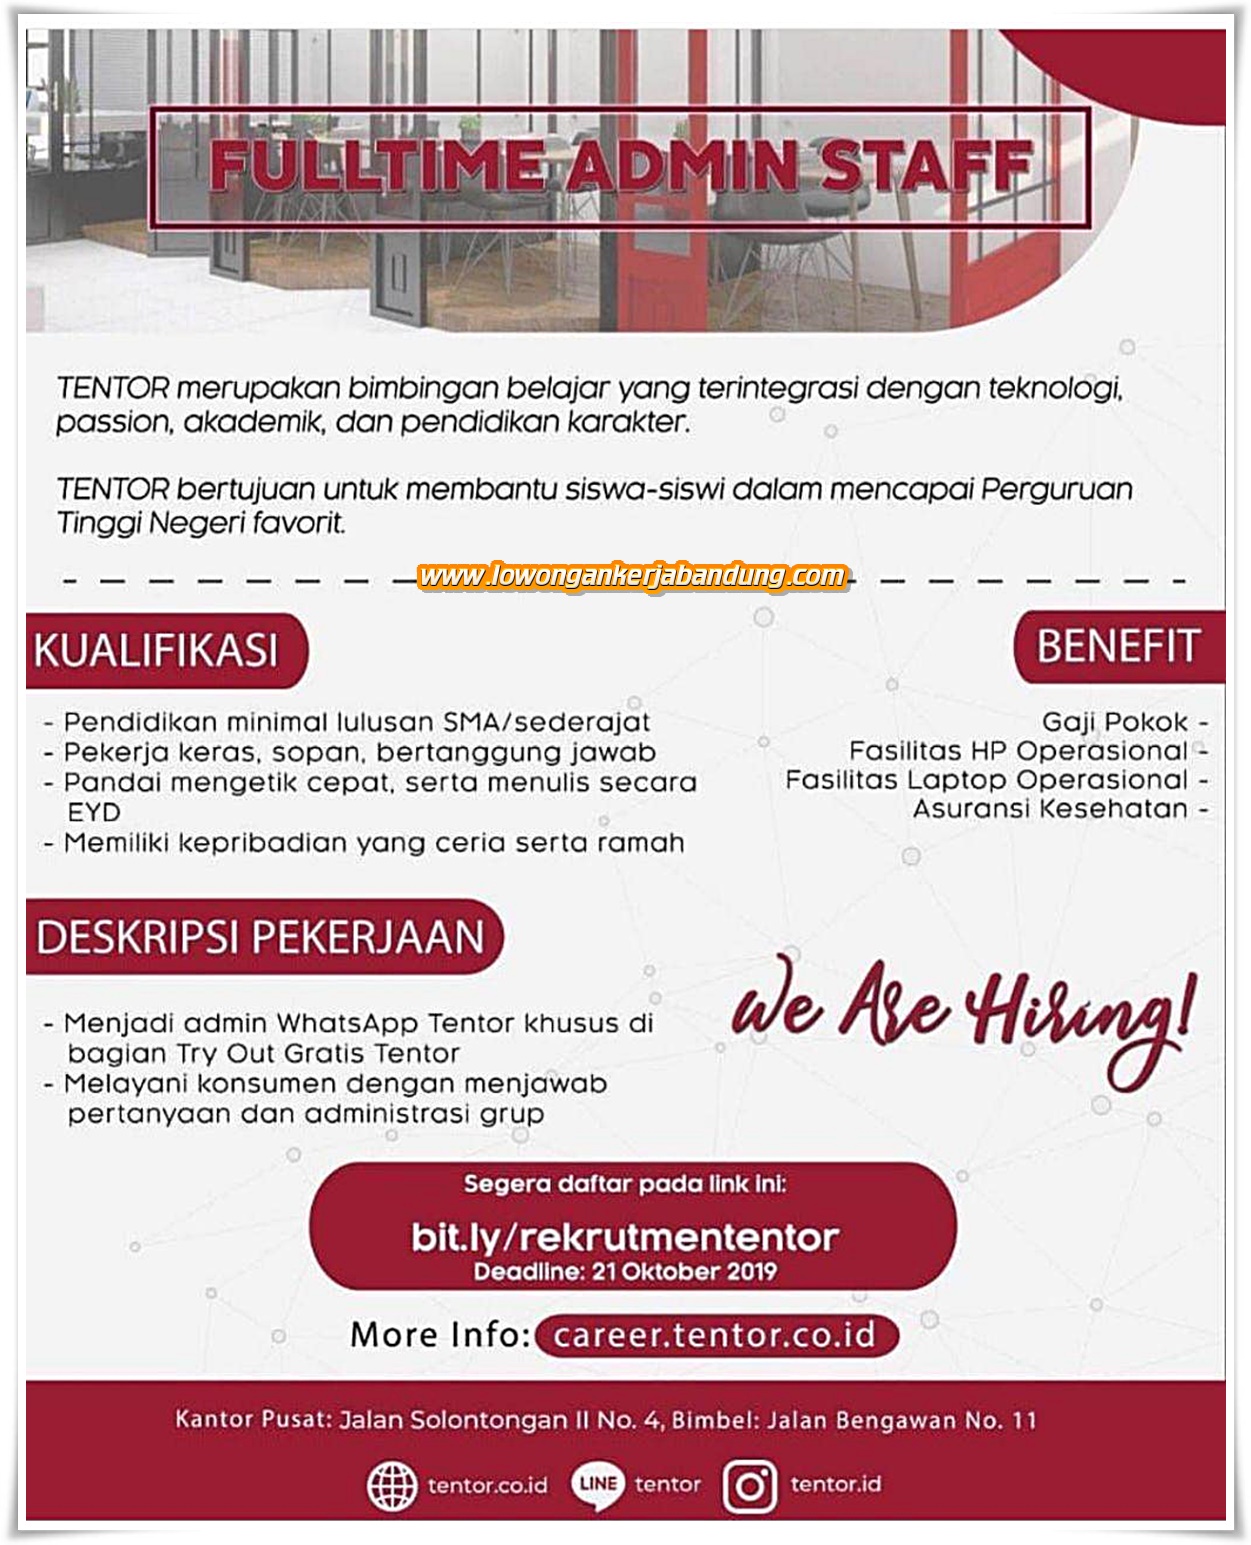 Lowongan Kerja Bandung Full Time Admin Staff Tentor.co.id - Loker